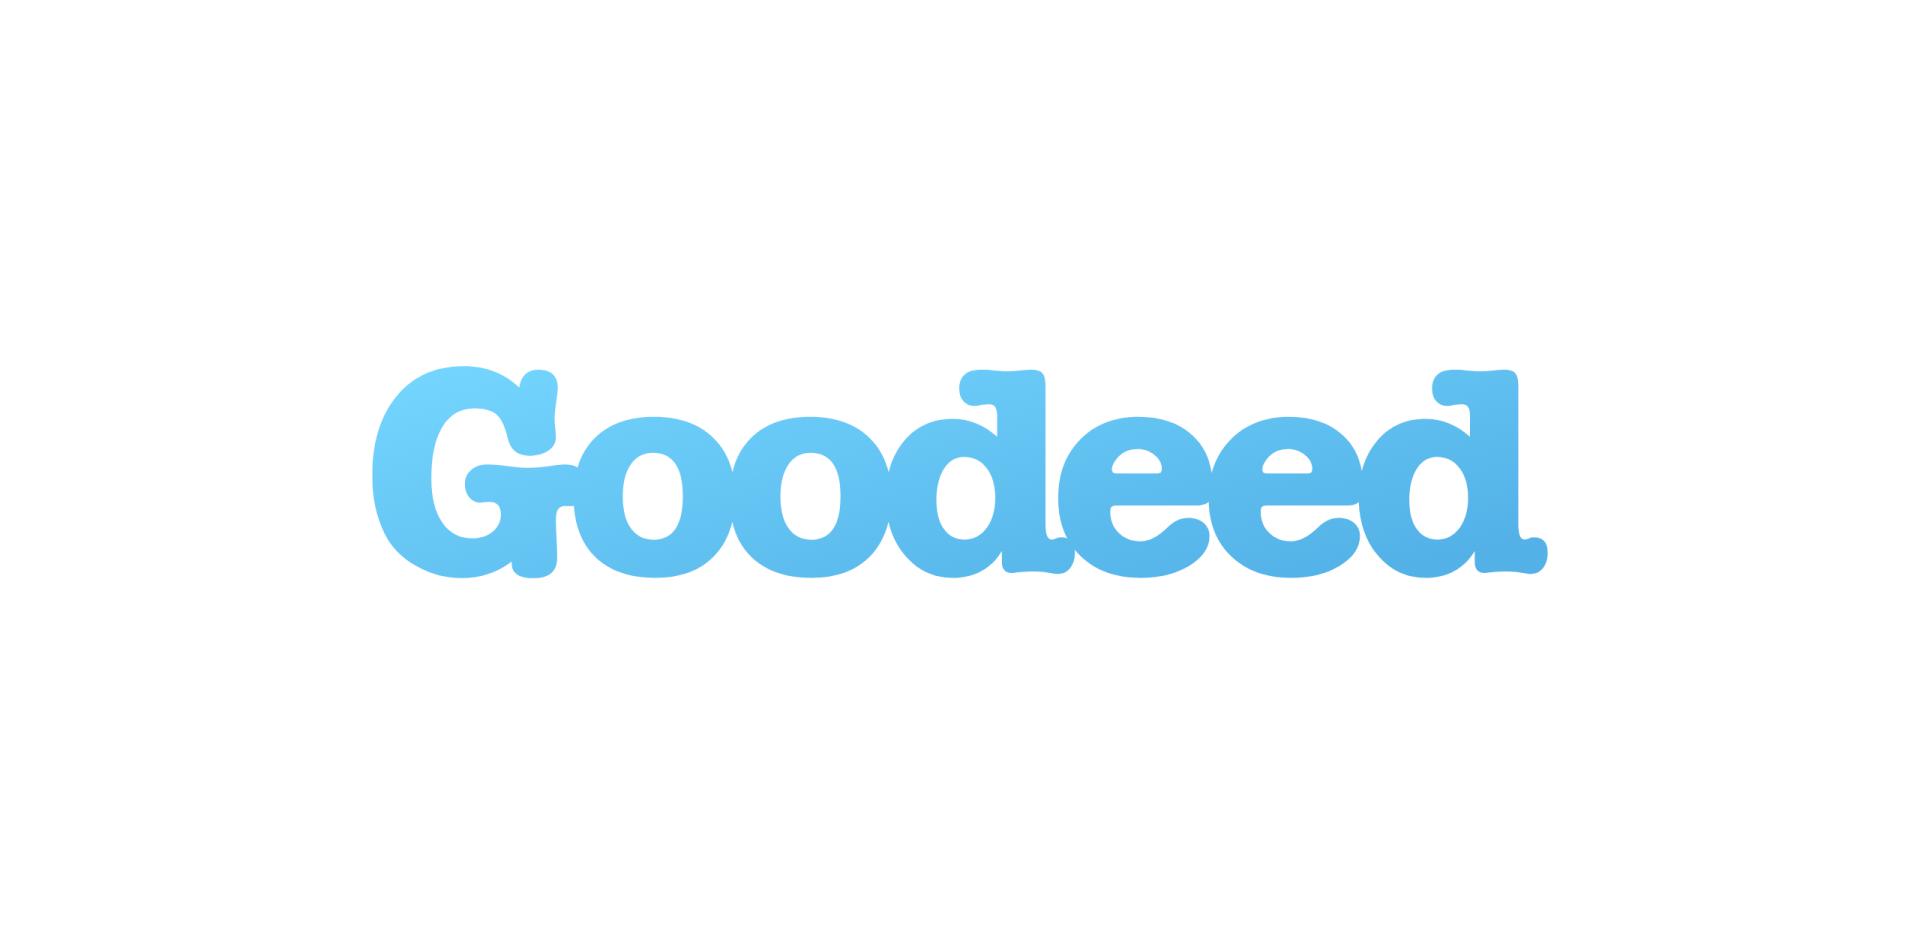 Goodeed